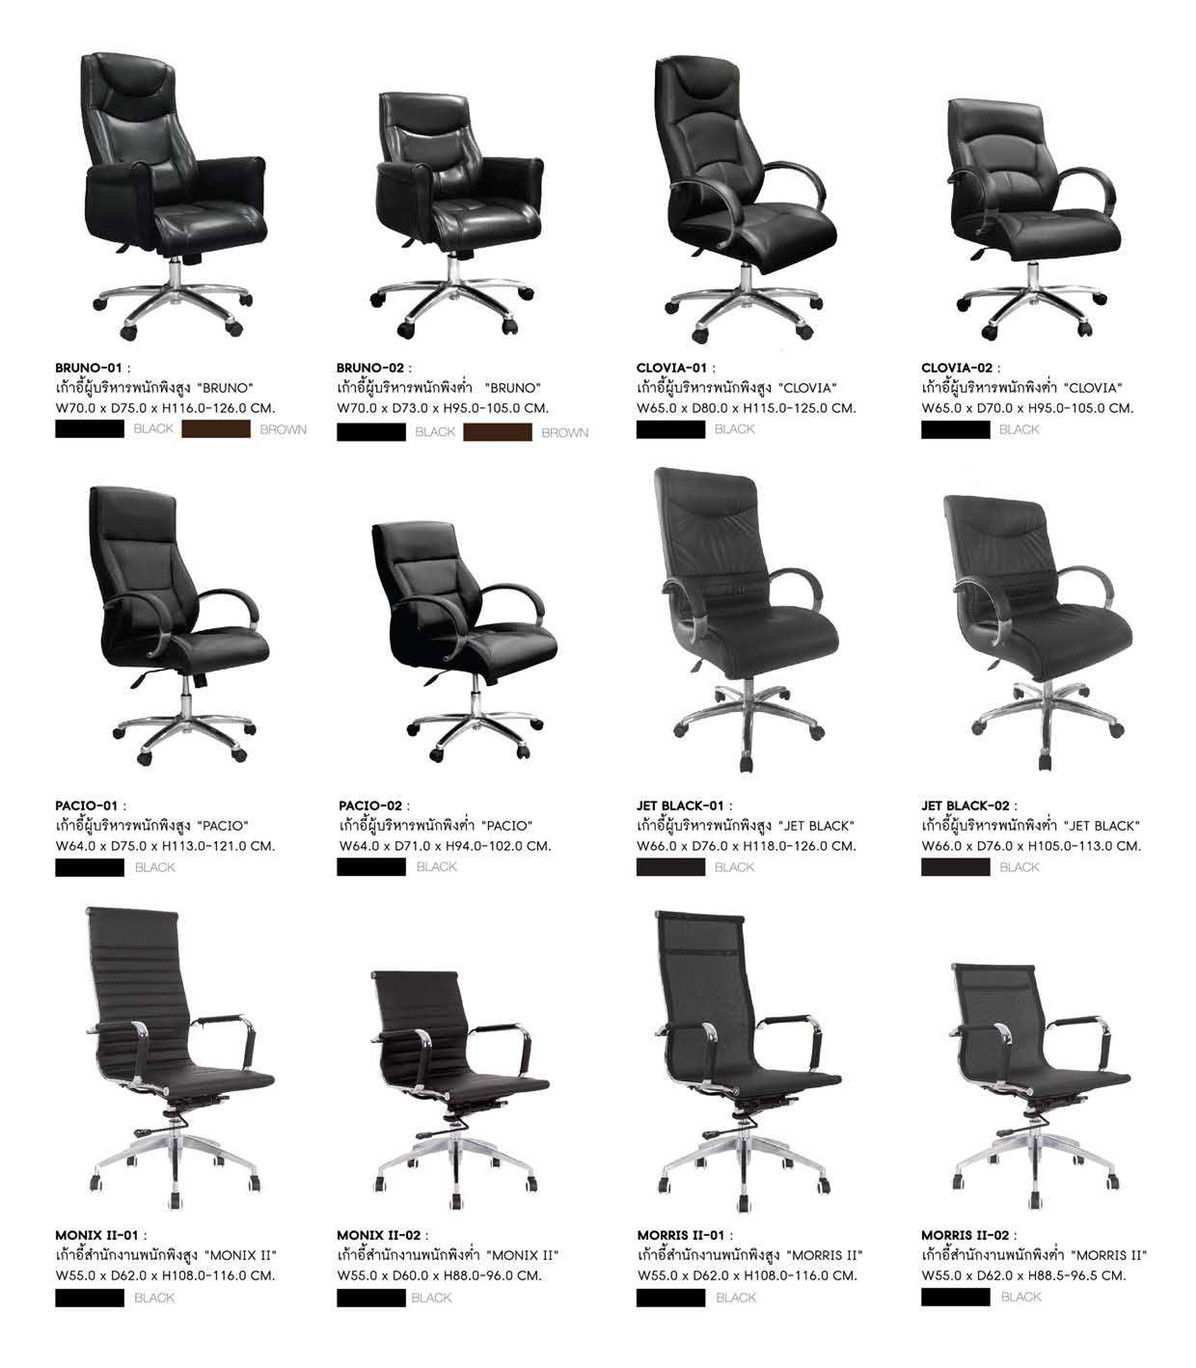 00095::PACIO-01::เก้าอี้ผู้บริหาร PACIO-01 ขนาด ก640xล740xส1140-1220 มม. สีดำ เก้าอี้ผู้บริหาร SURE